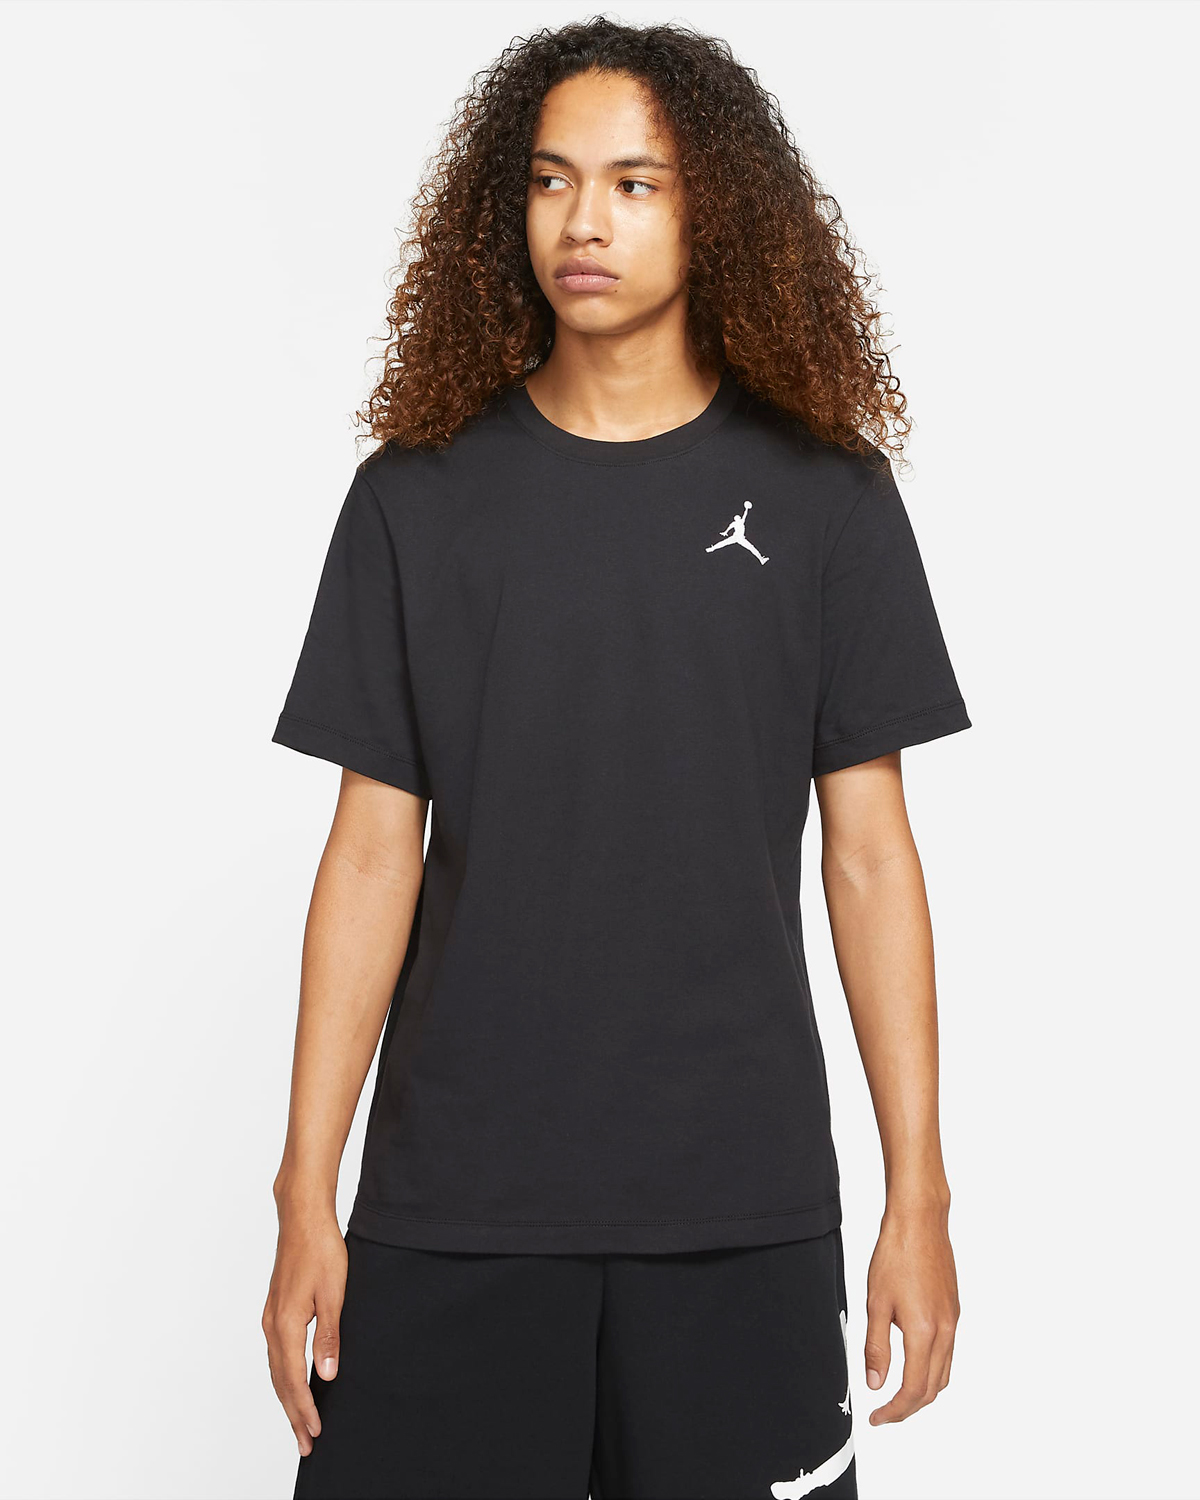 Jordan-Jumpman-T-Shirt-Black-White-1